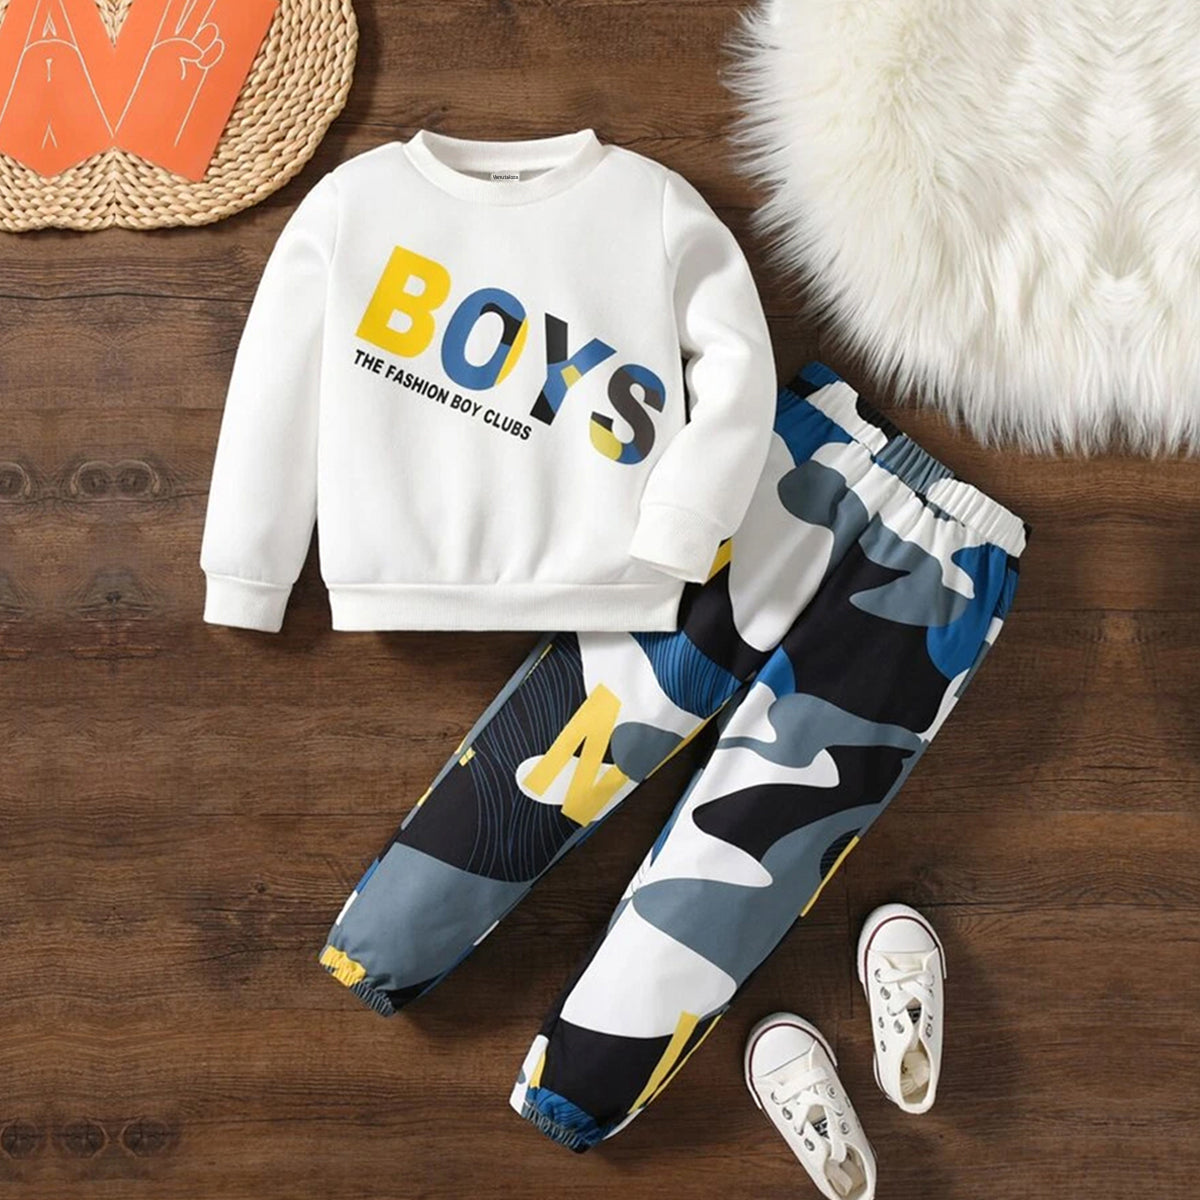 Venutaloza Stylish Baby Set Letters Graphic Print & Boys Design (Combo Pack Of 2) T-Shirt & Pants.